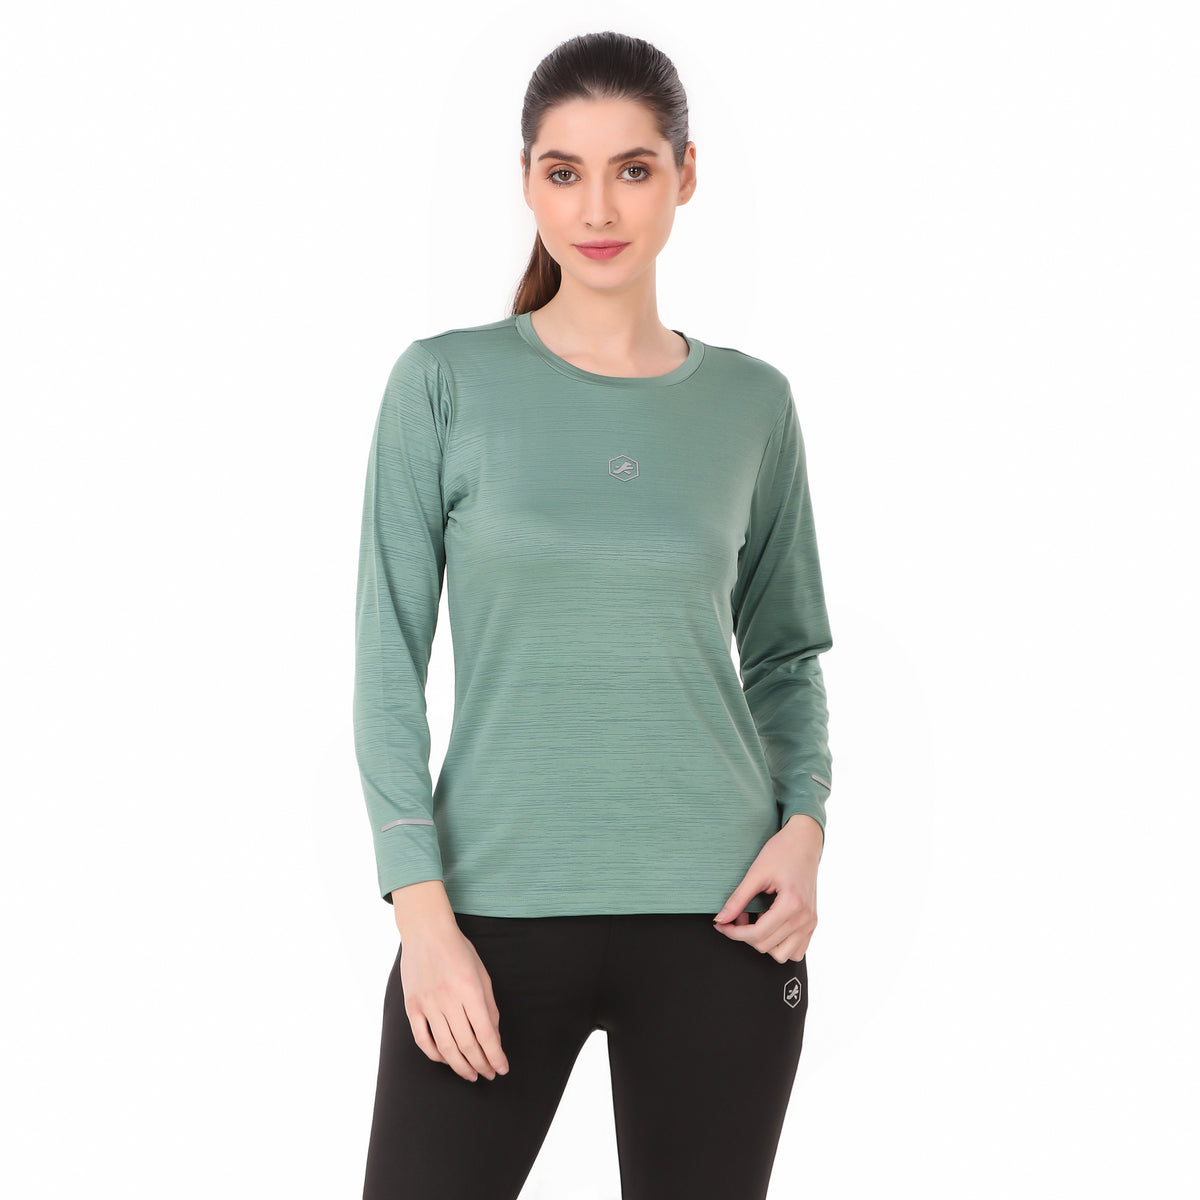 Performance Self Design Tshirt For Women FS (Pastel Green)